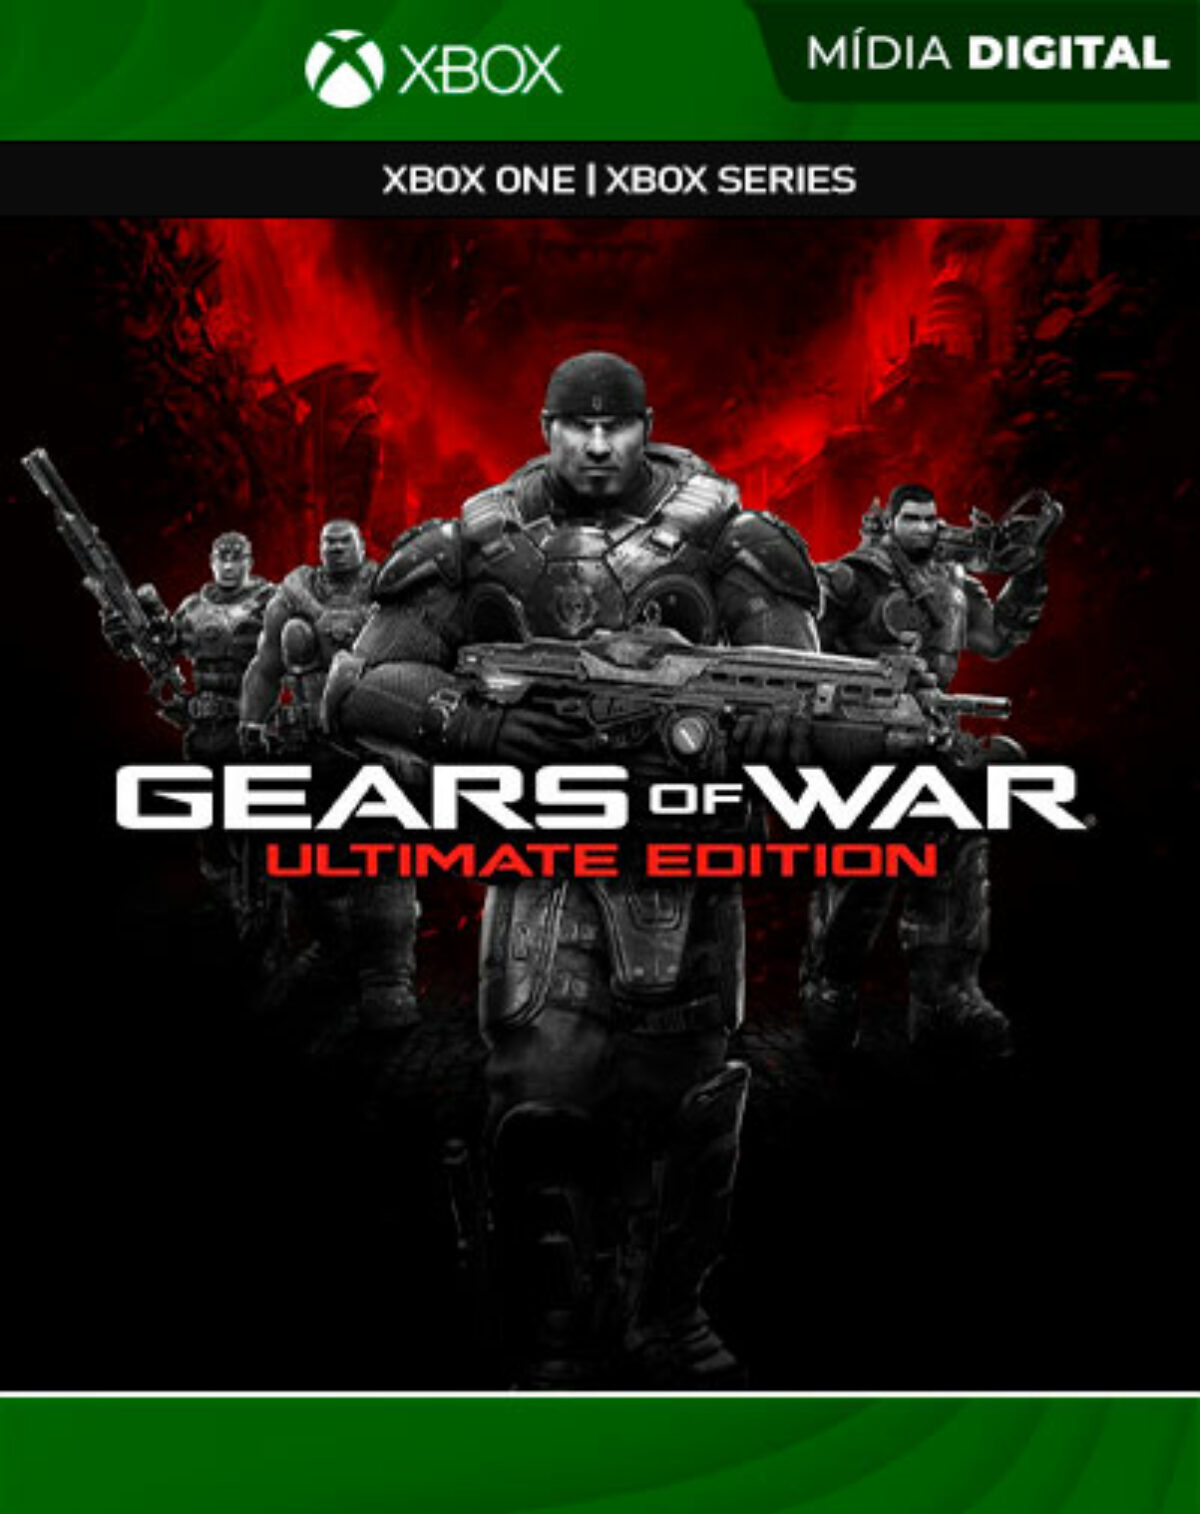 Mídia Física Gears Of War 4 Ultimate Edition Xbox One Novo - GAMES &  ELETRONICOS